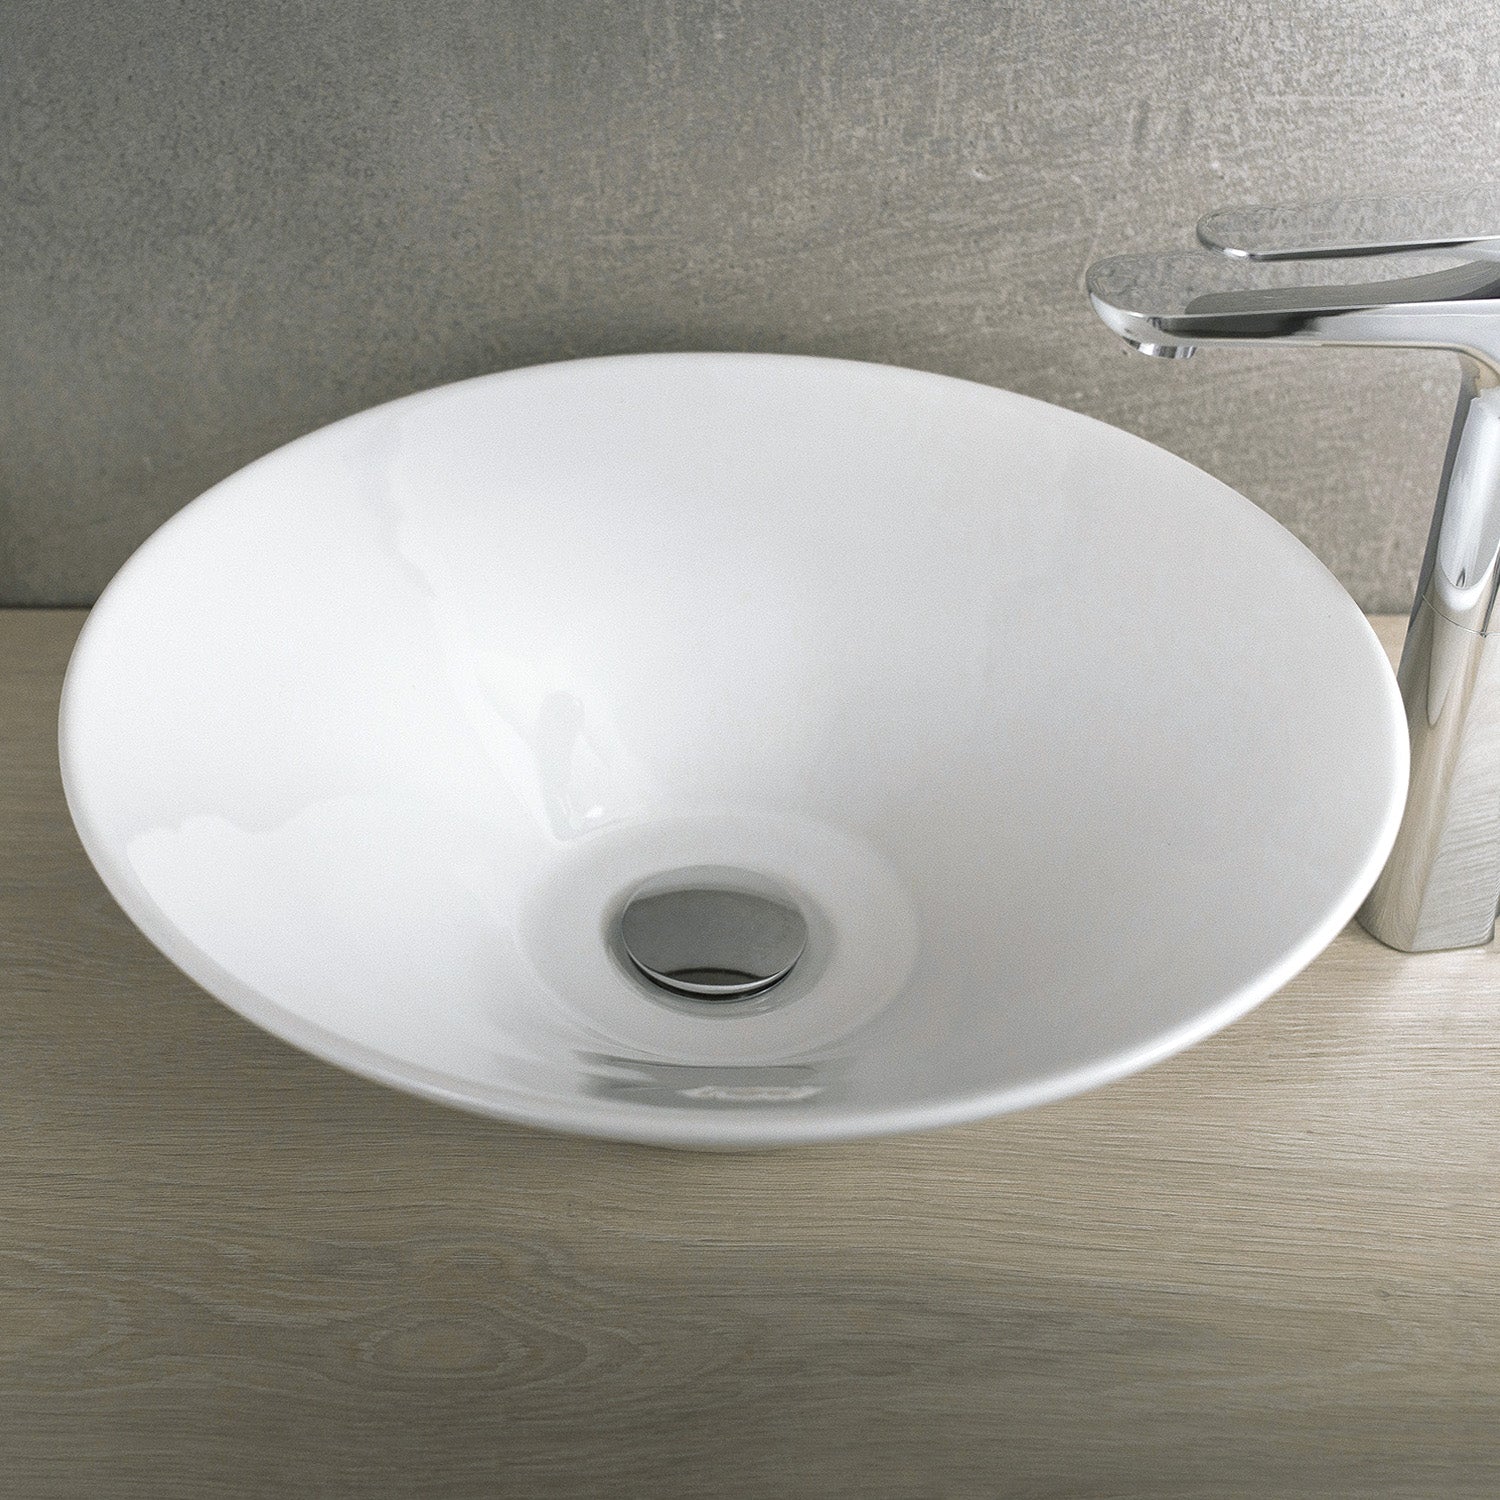 Lavabo redondo de cerámica para baño de un solo tazón DAX, acabado blanco, 17 x 5-1/2 pulgadas (BSN-234)